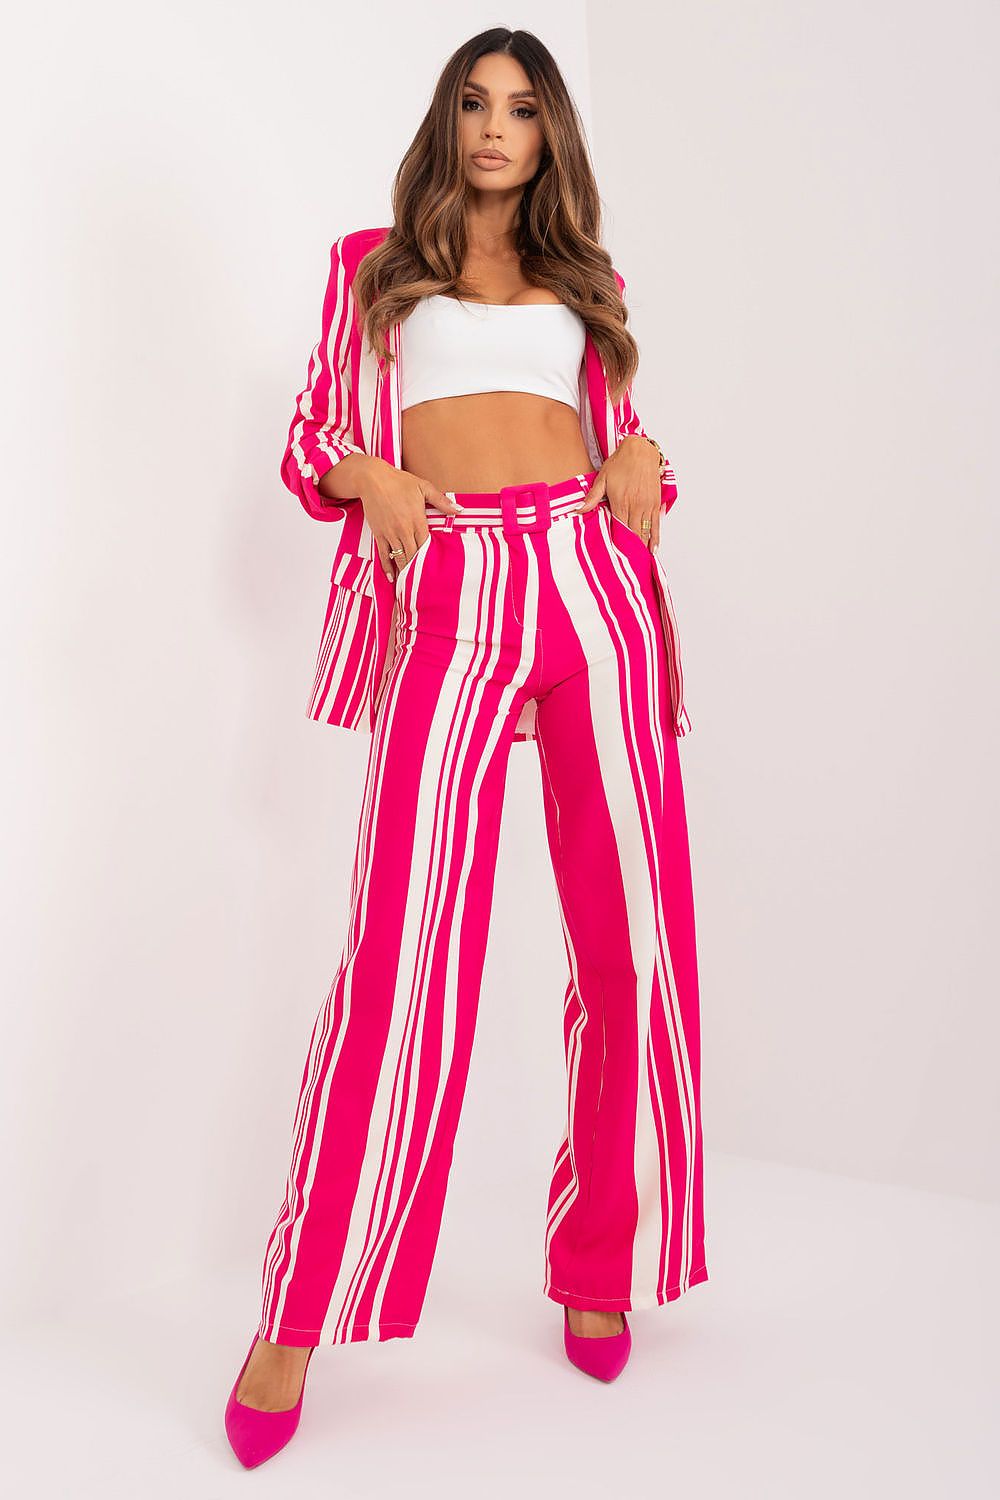 TEEK - Candy Stripe Trousers PANTS TEEK MH pink L 